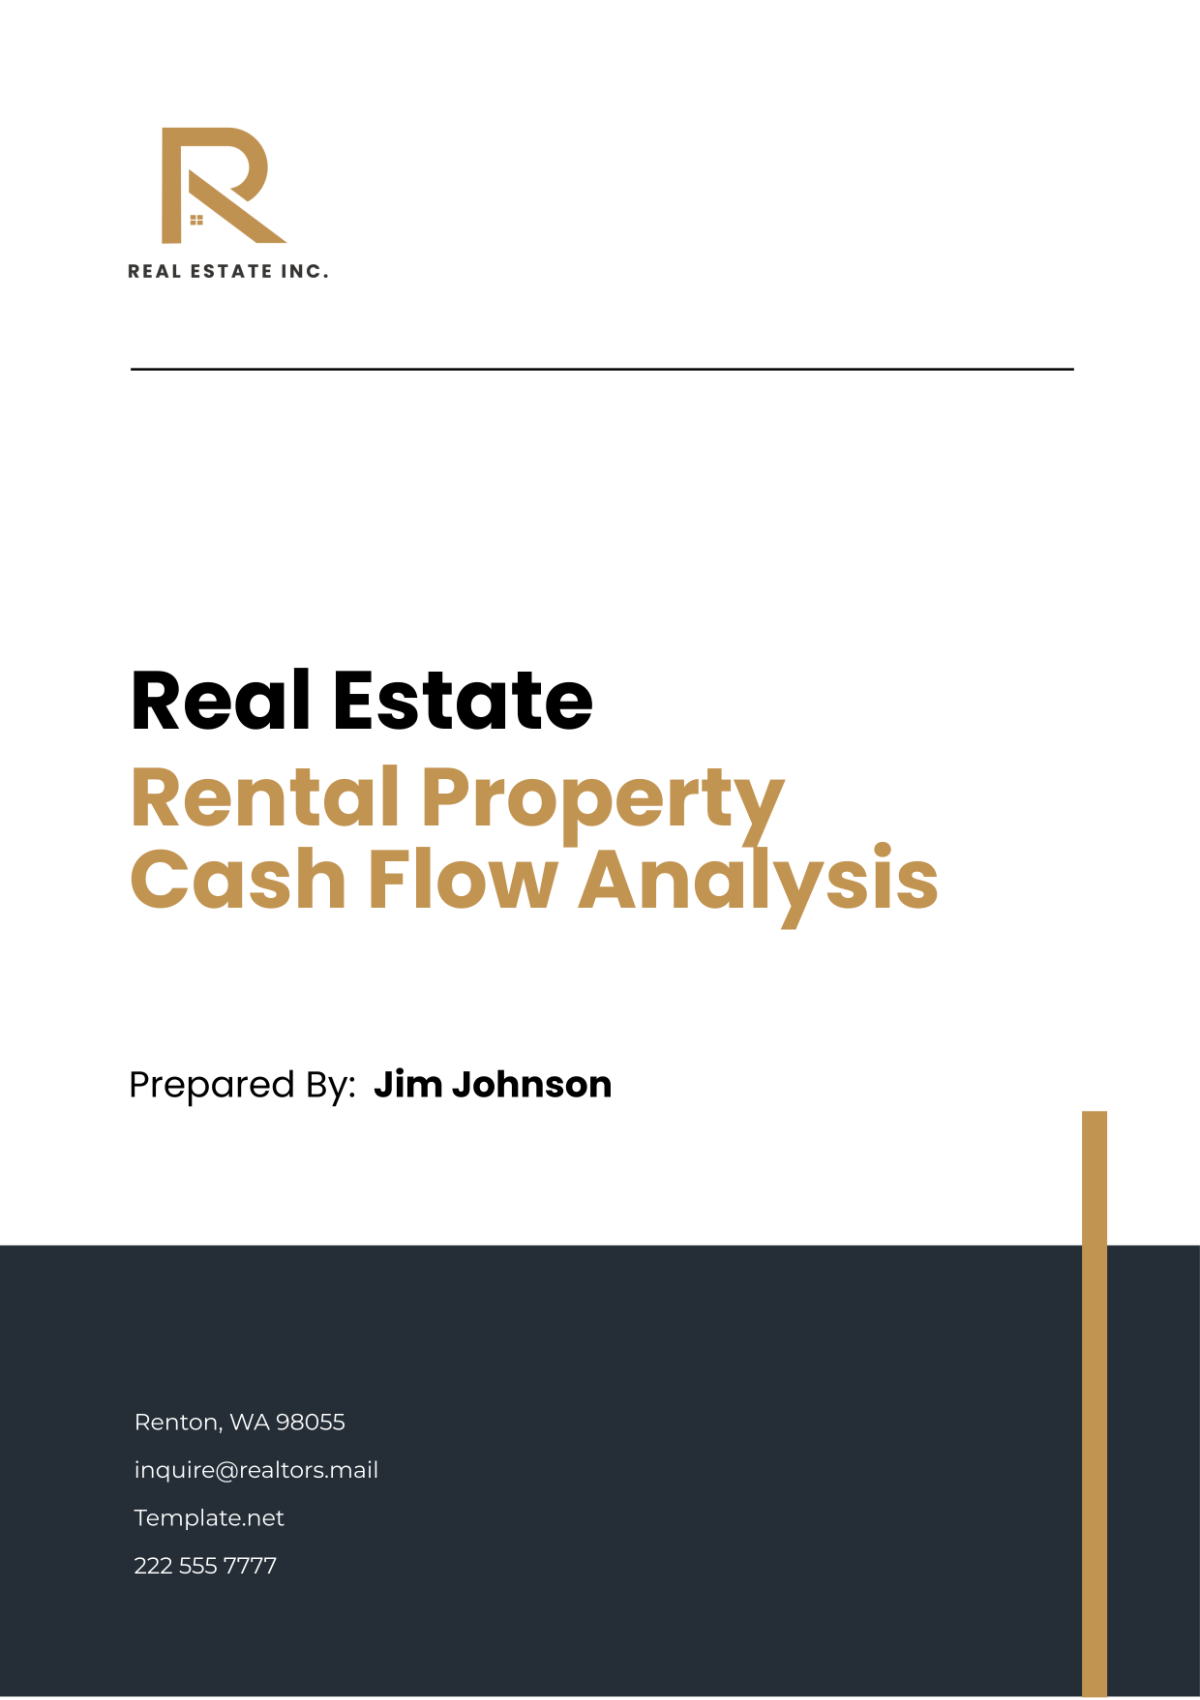 Real Estate Rental Property Cash Flow Analysis Template